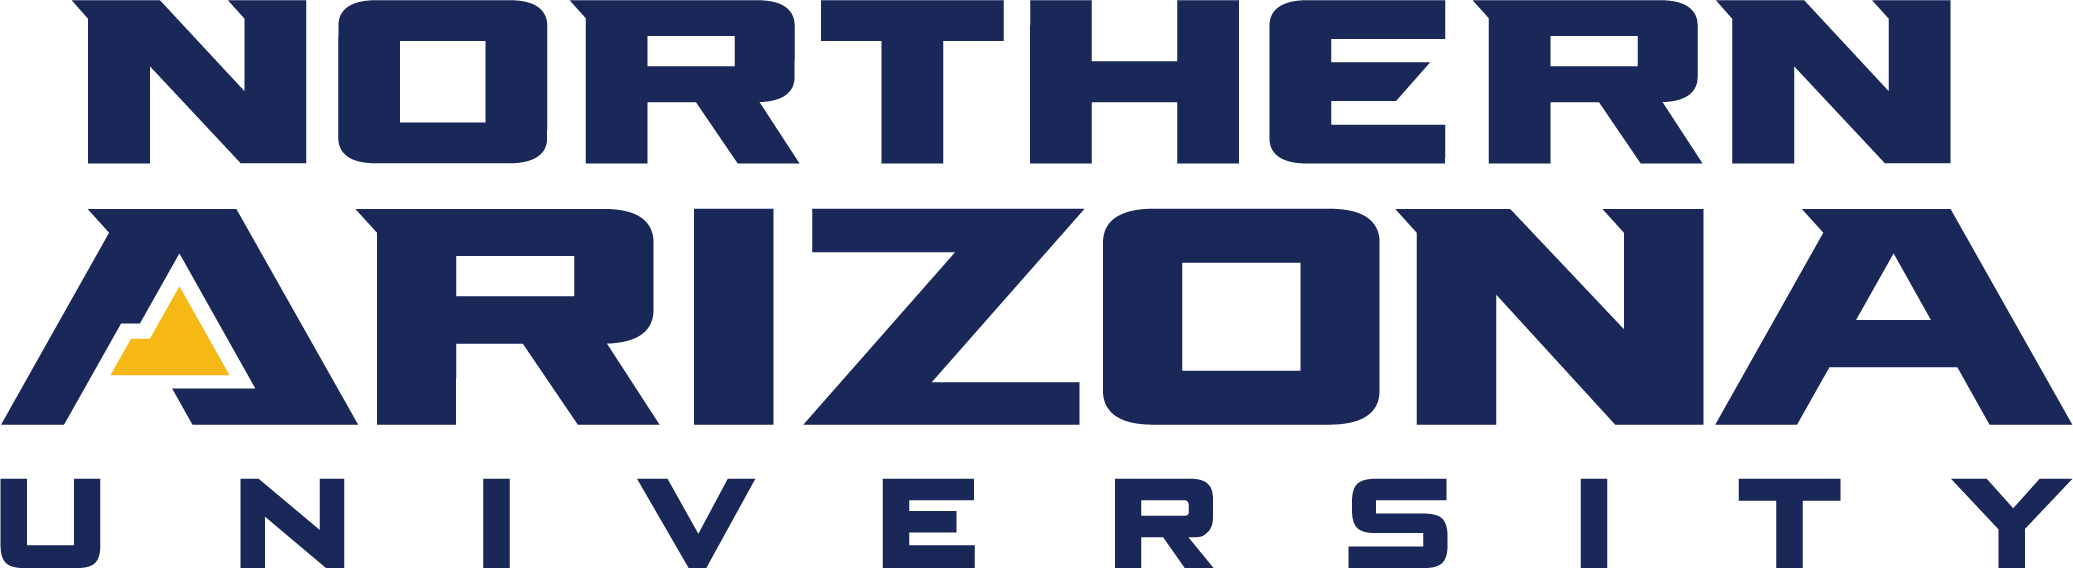 Northern Arizona University's Wordmark, featuring N A U true blue.